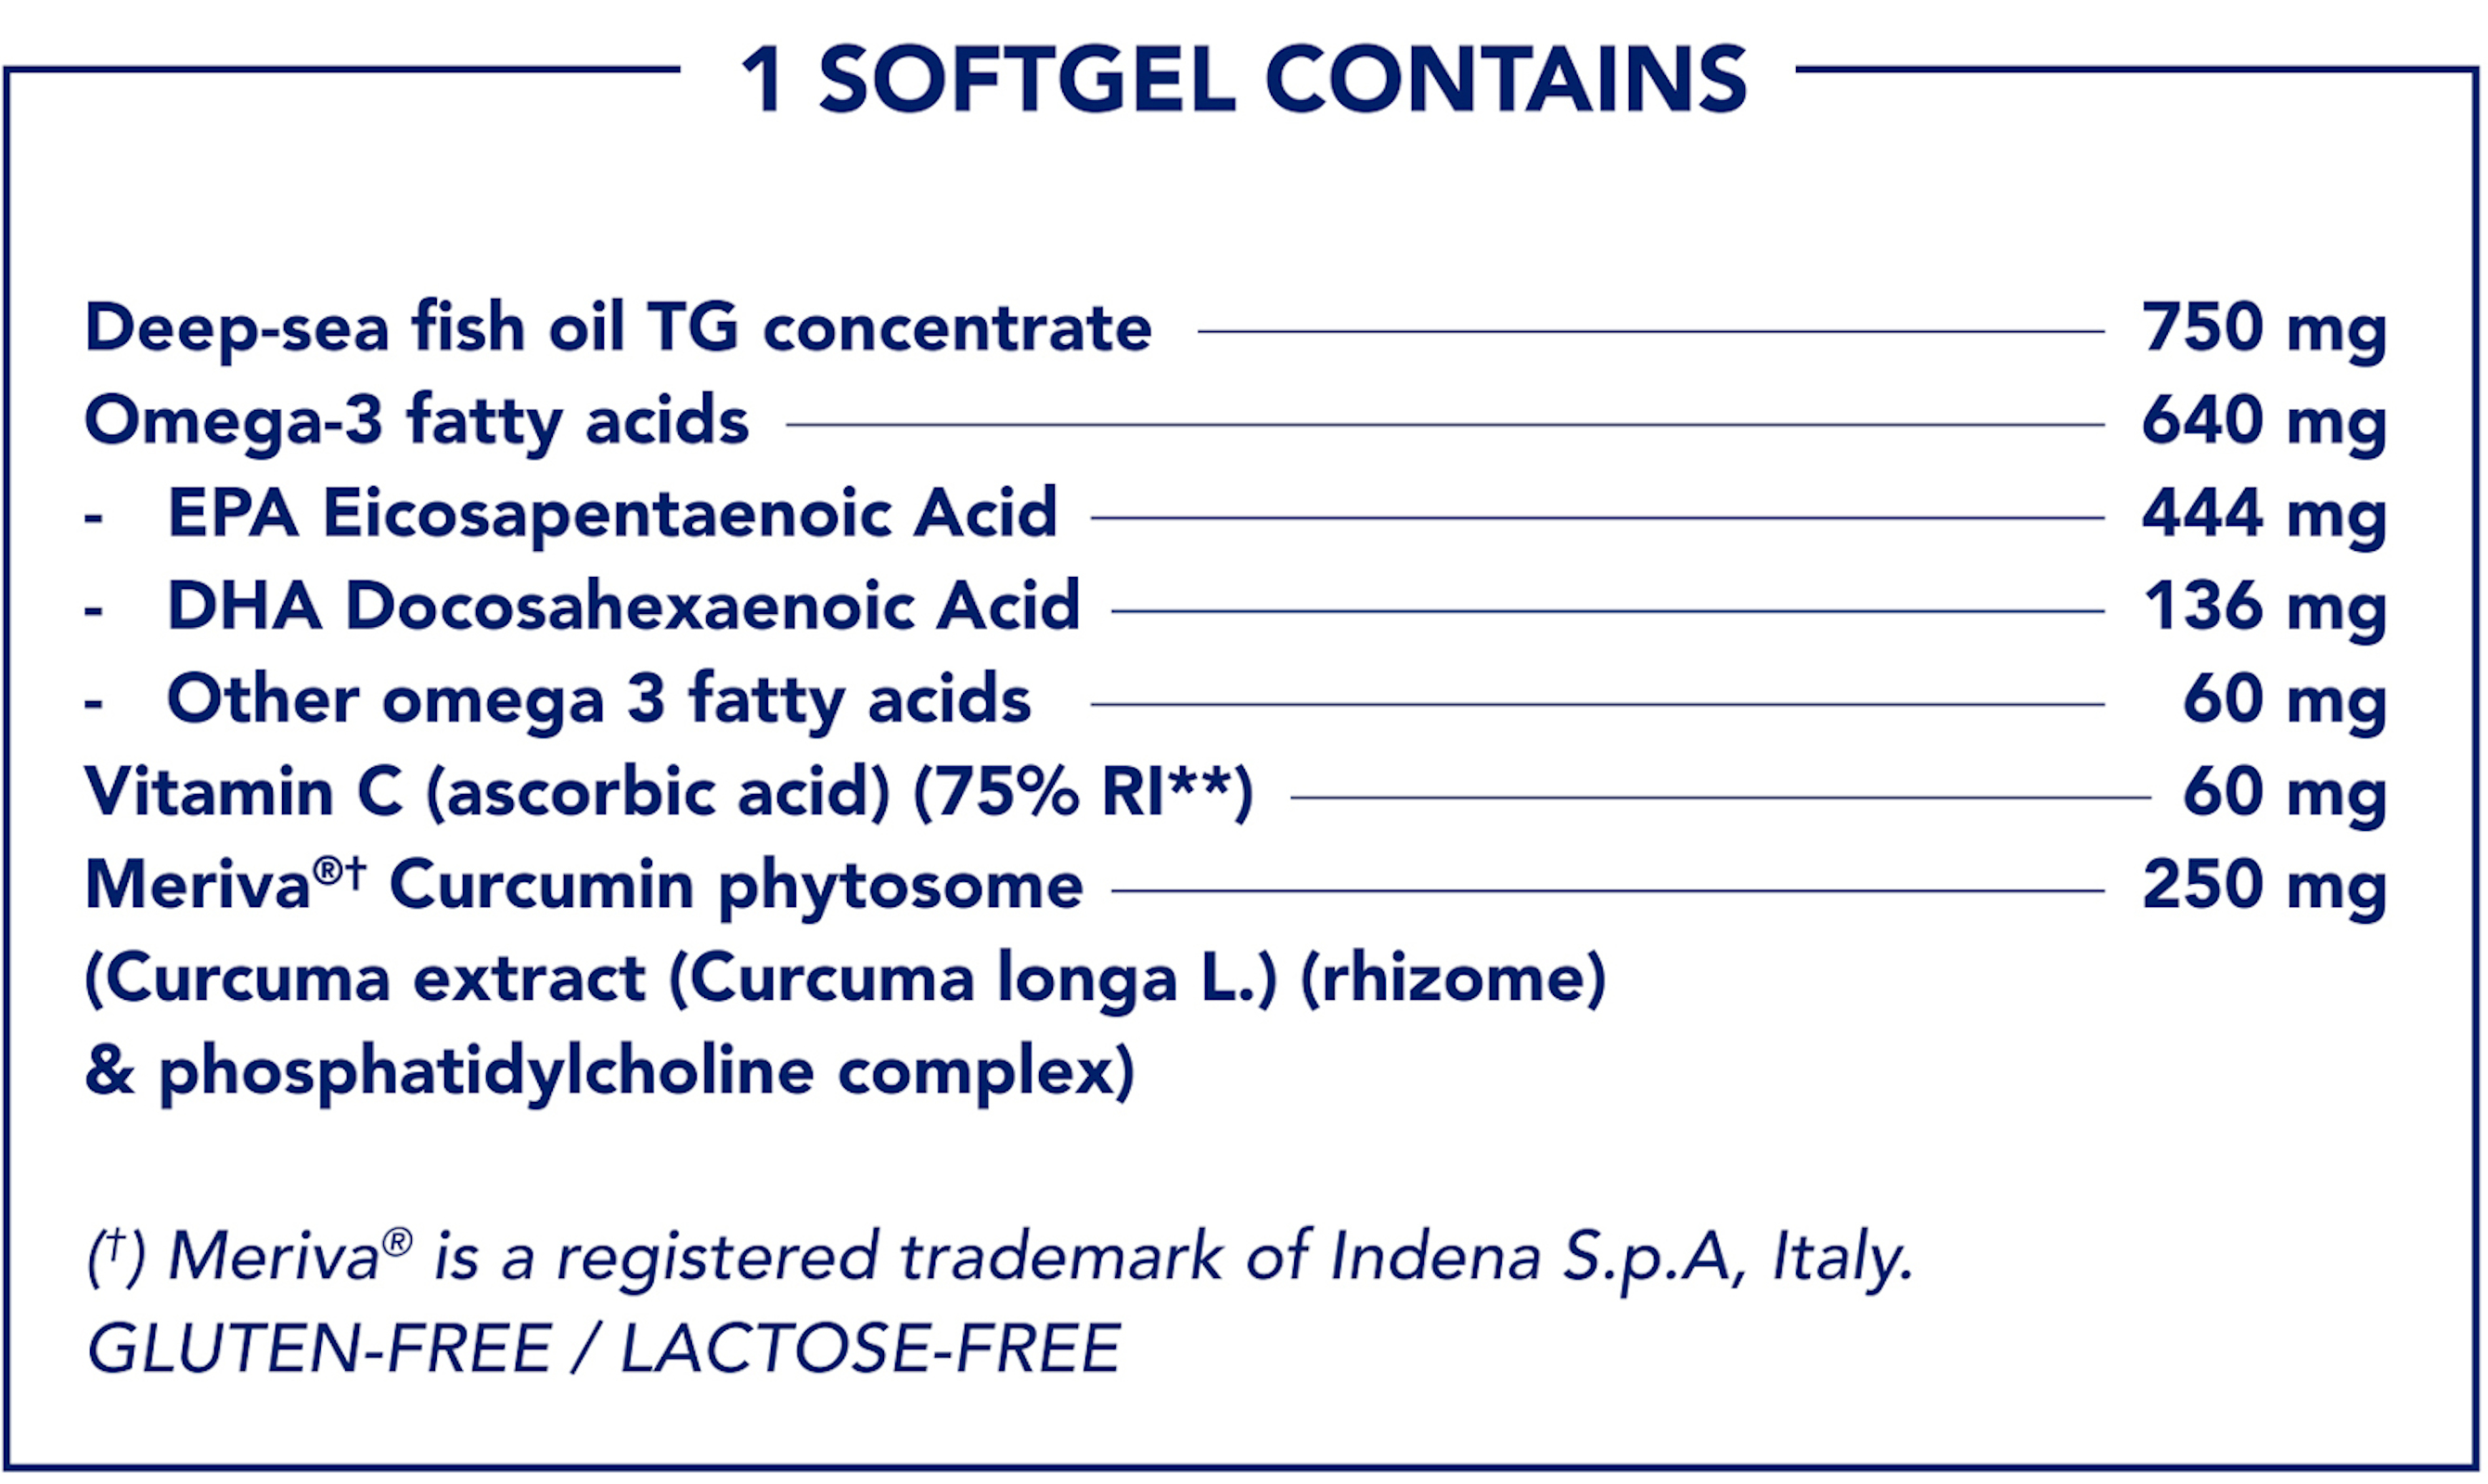 1 SOFTGEL CONTAINS
                                  Deep-sea fish oil TG concentrate 750 mg
                                  Omega-3 fatty acids 640 mg
                                  EPA Eicosapentaenoic Acid 444 mg
                                  DHA Docosahexaenoic Acid 136 mg
                                  Other omega 3 fatty acids 60 mg
                                  Vitamin C (ascorbic acid) (75% RI**) 60 mg
                                  MerivaⓇ+ Curcumin phytosome 250 mg
                                  (Curcuma extract (Curcuma longa L.) (rhizome) & phosphatidylcholine complex)
                                  (¹) Meriva® is a registered trademark of Indena S.p.A, Italy.
                                  GLUTEN-FREE/ LACTOSE-FREE